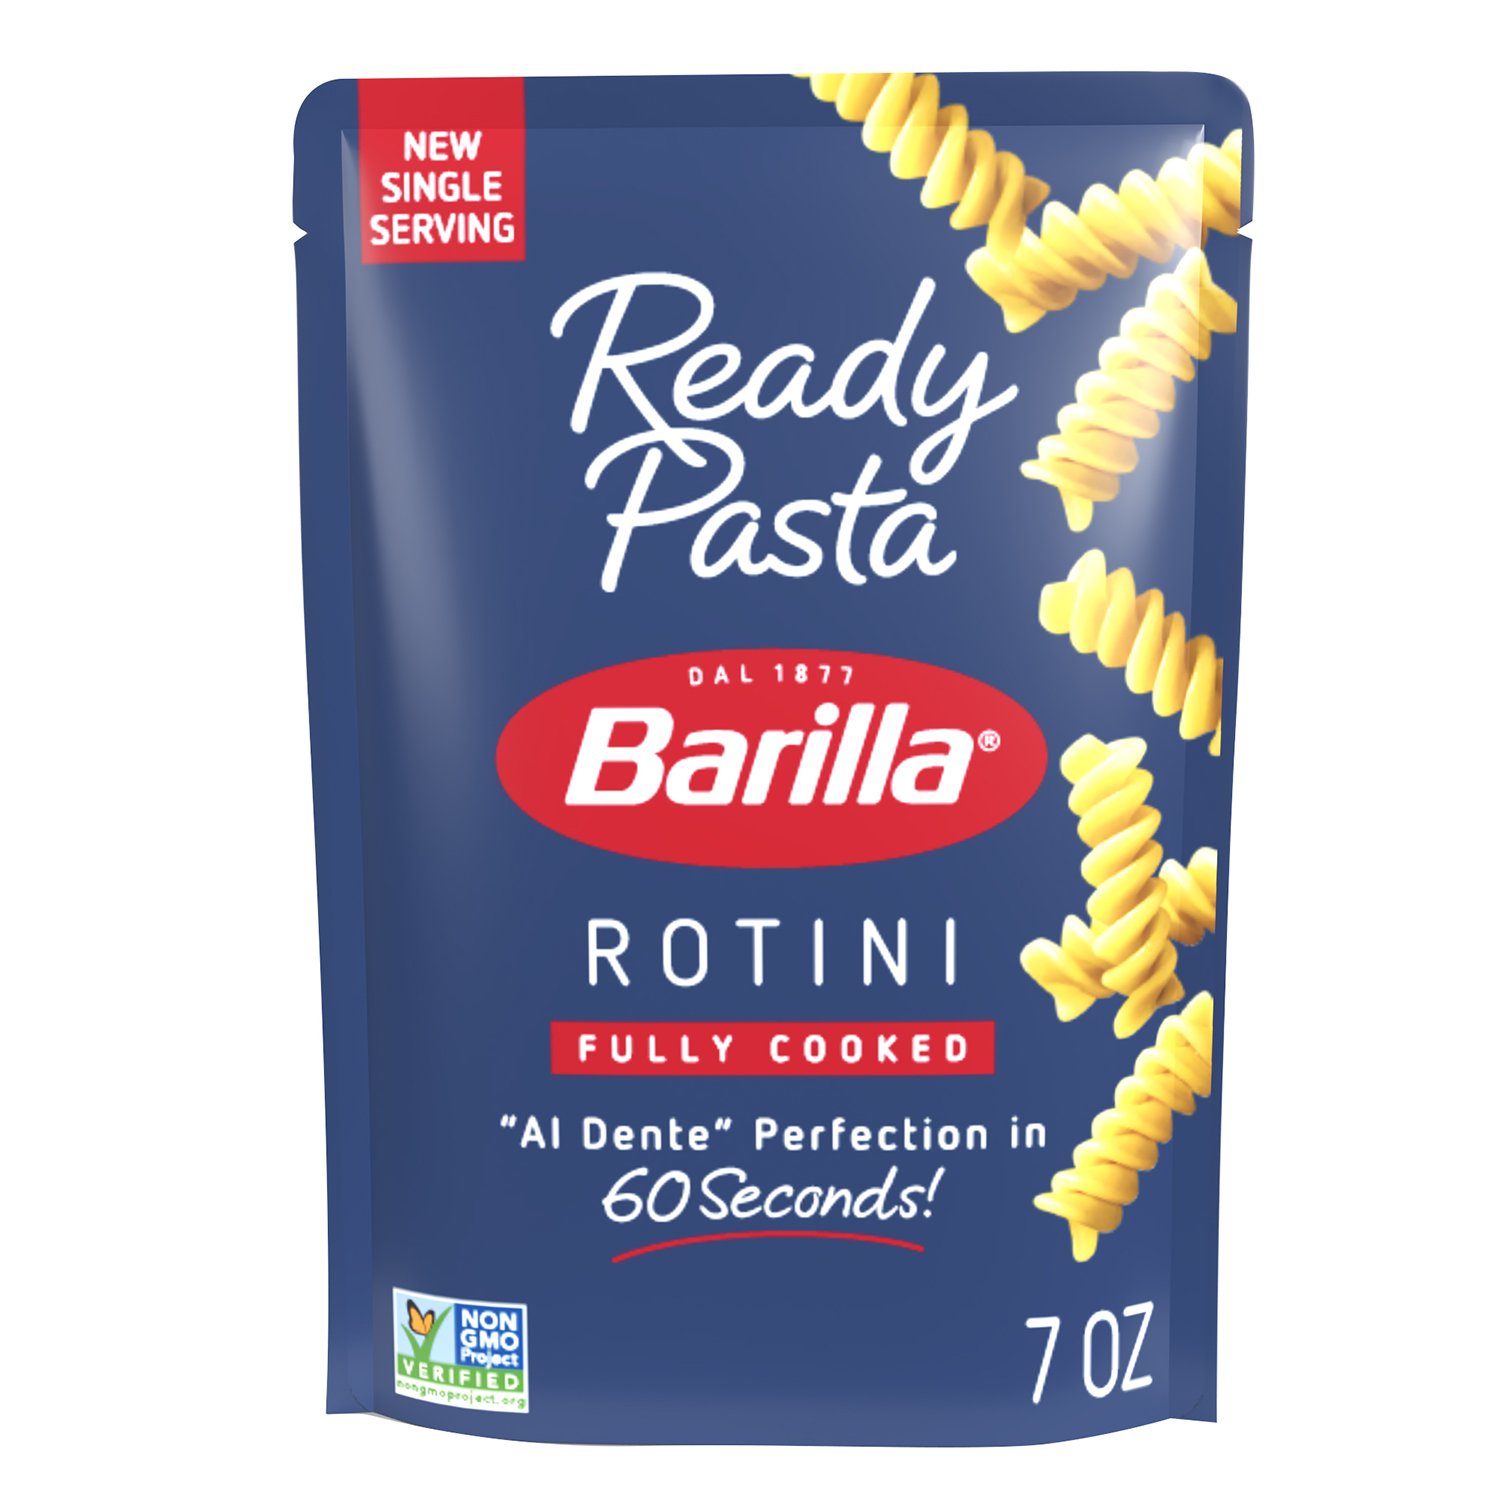 Pasta Rotini Barilla H-E-B Pasta Shop - Ready at